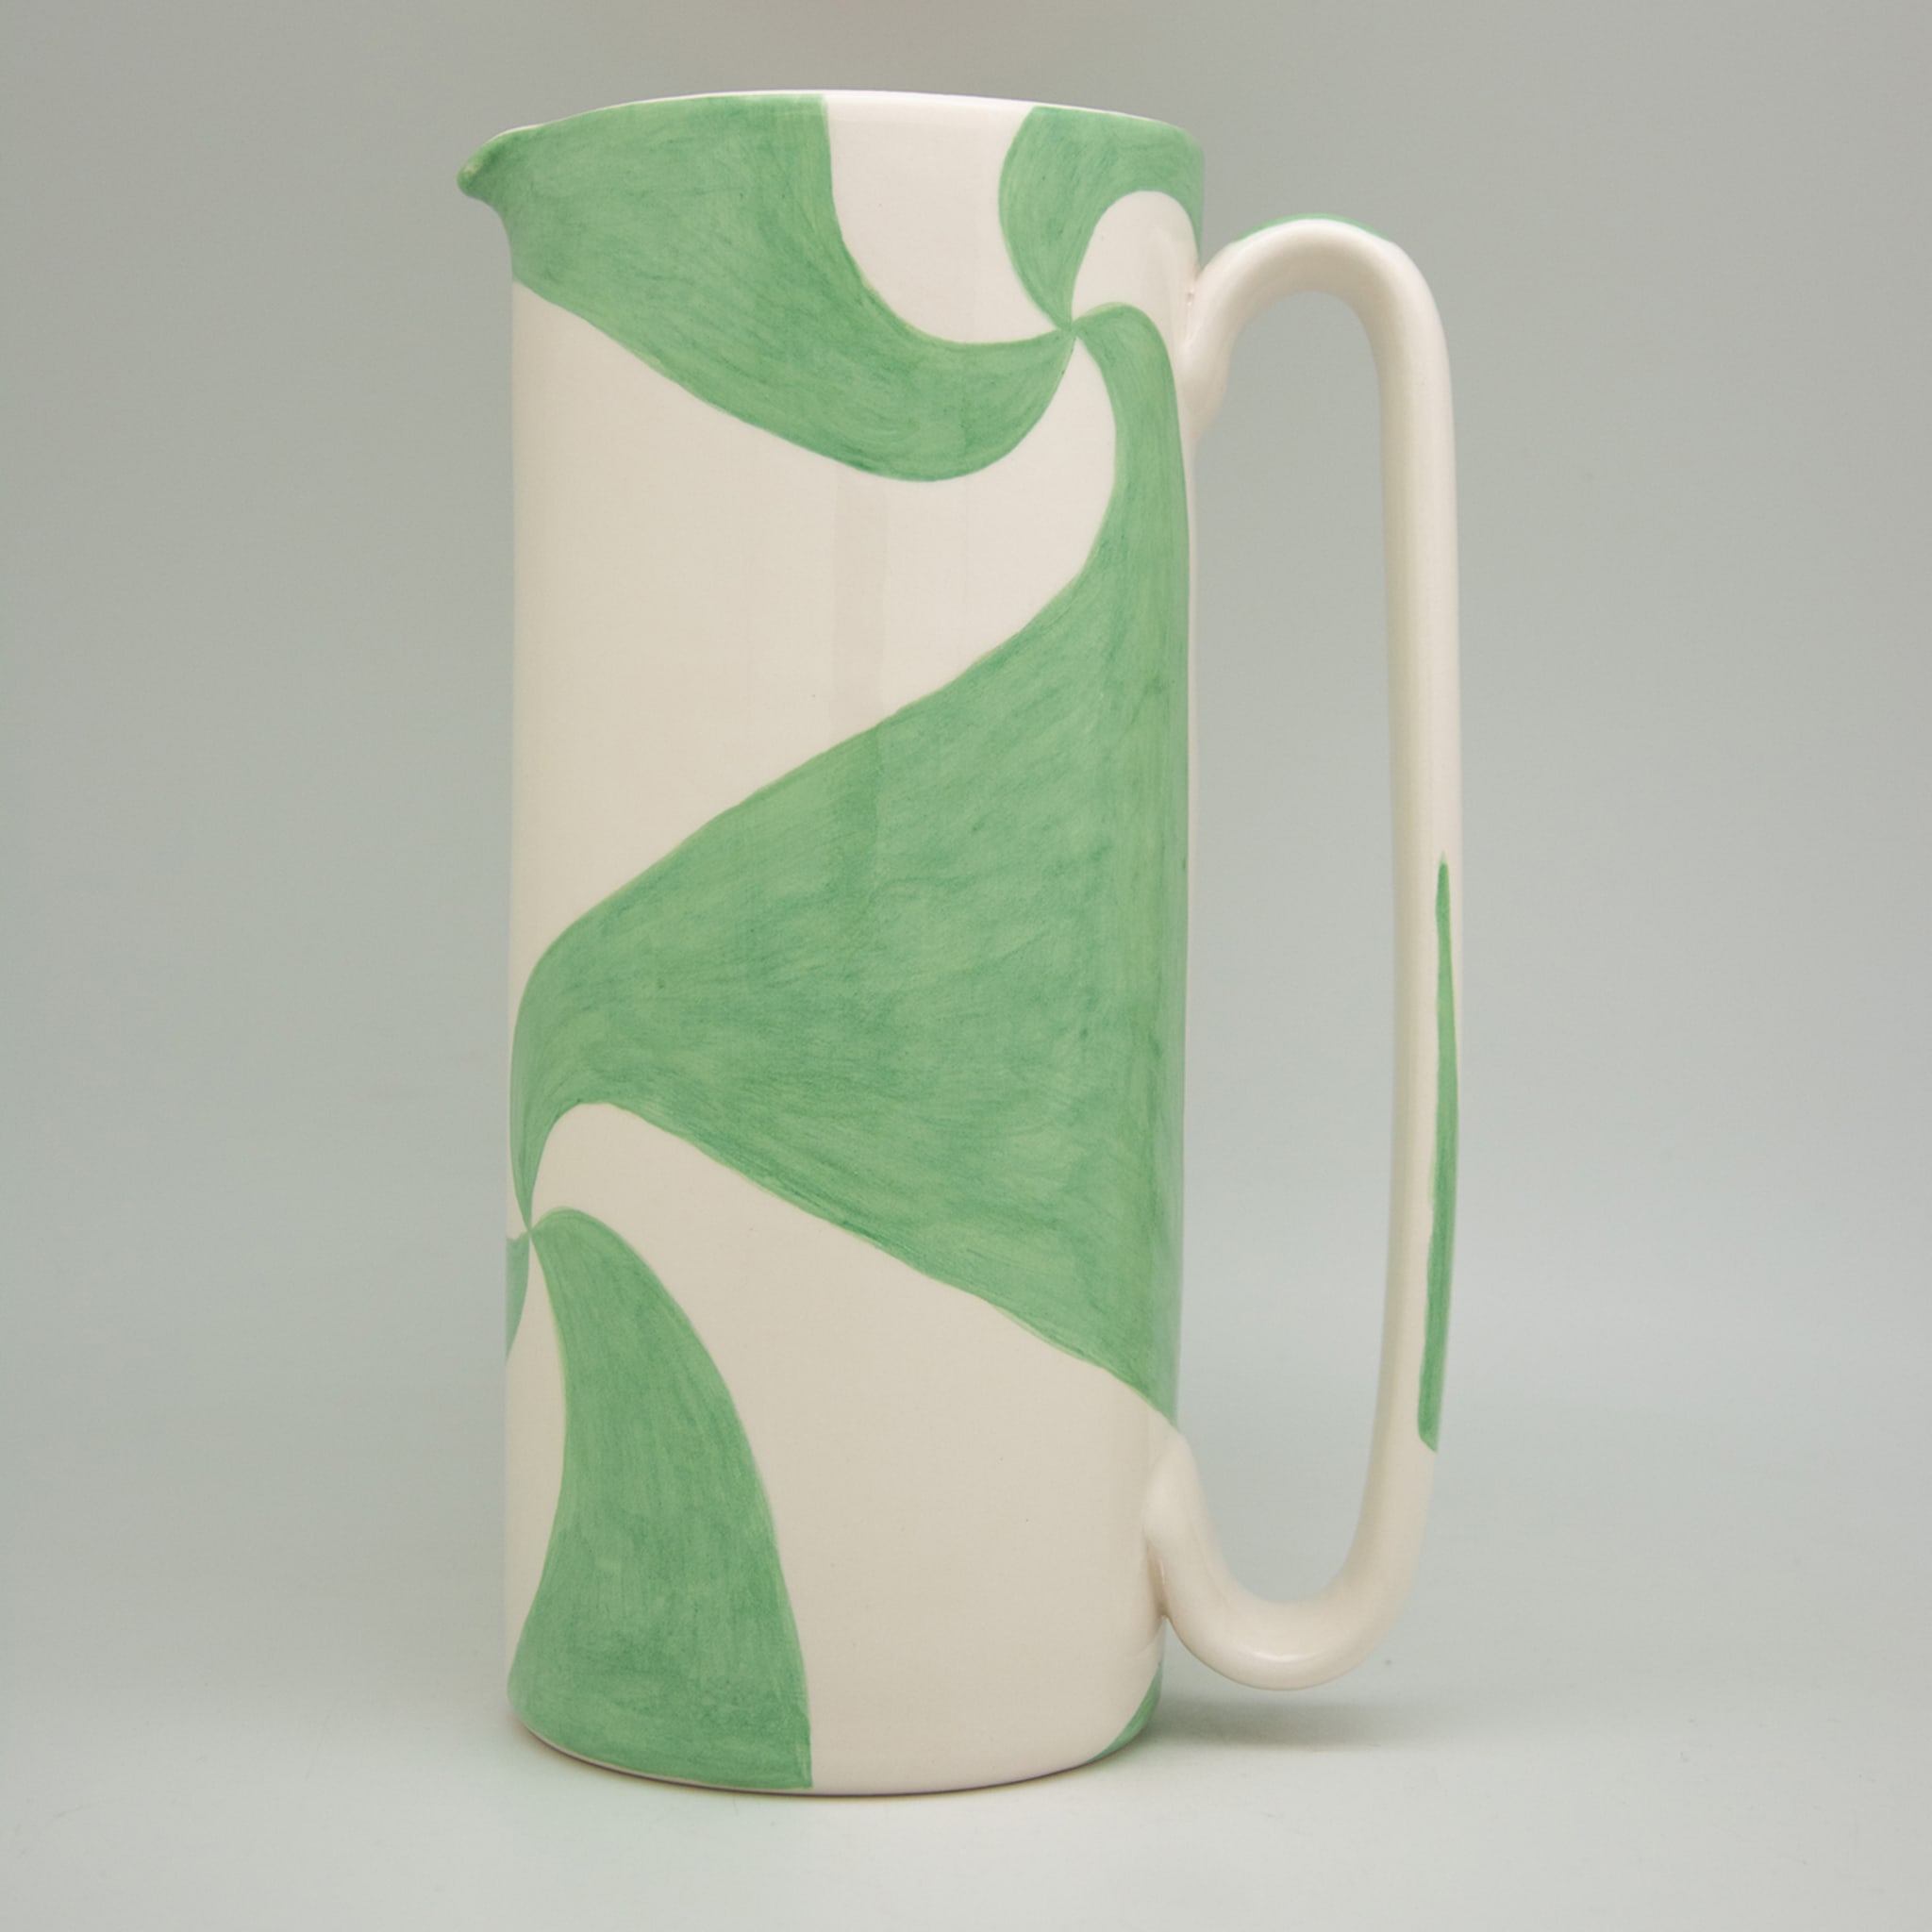 Serlio Green Atellani Ceramic Carafe  - Alternative view 1